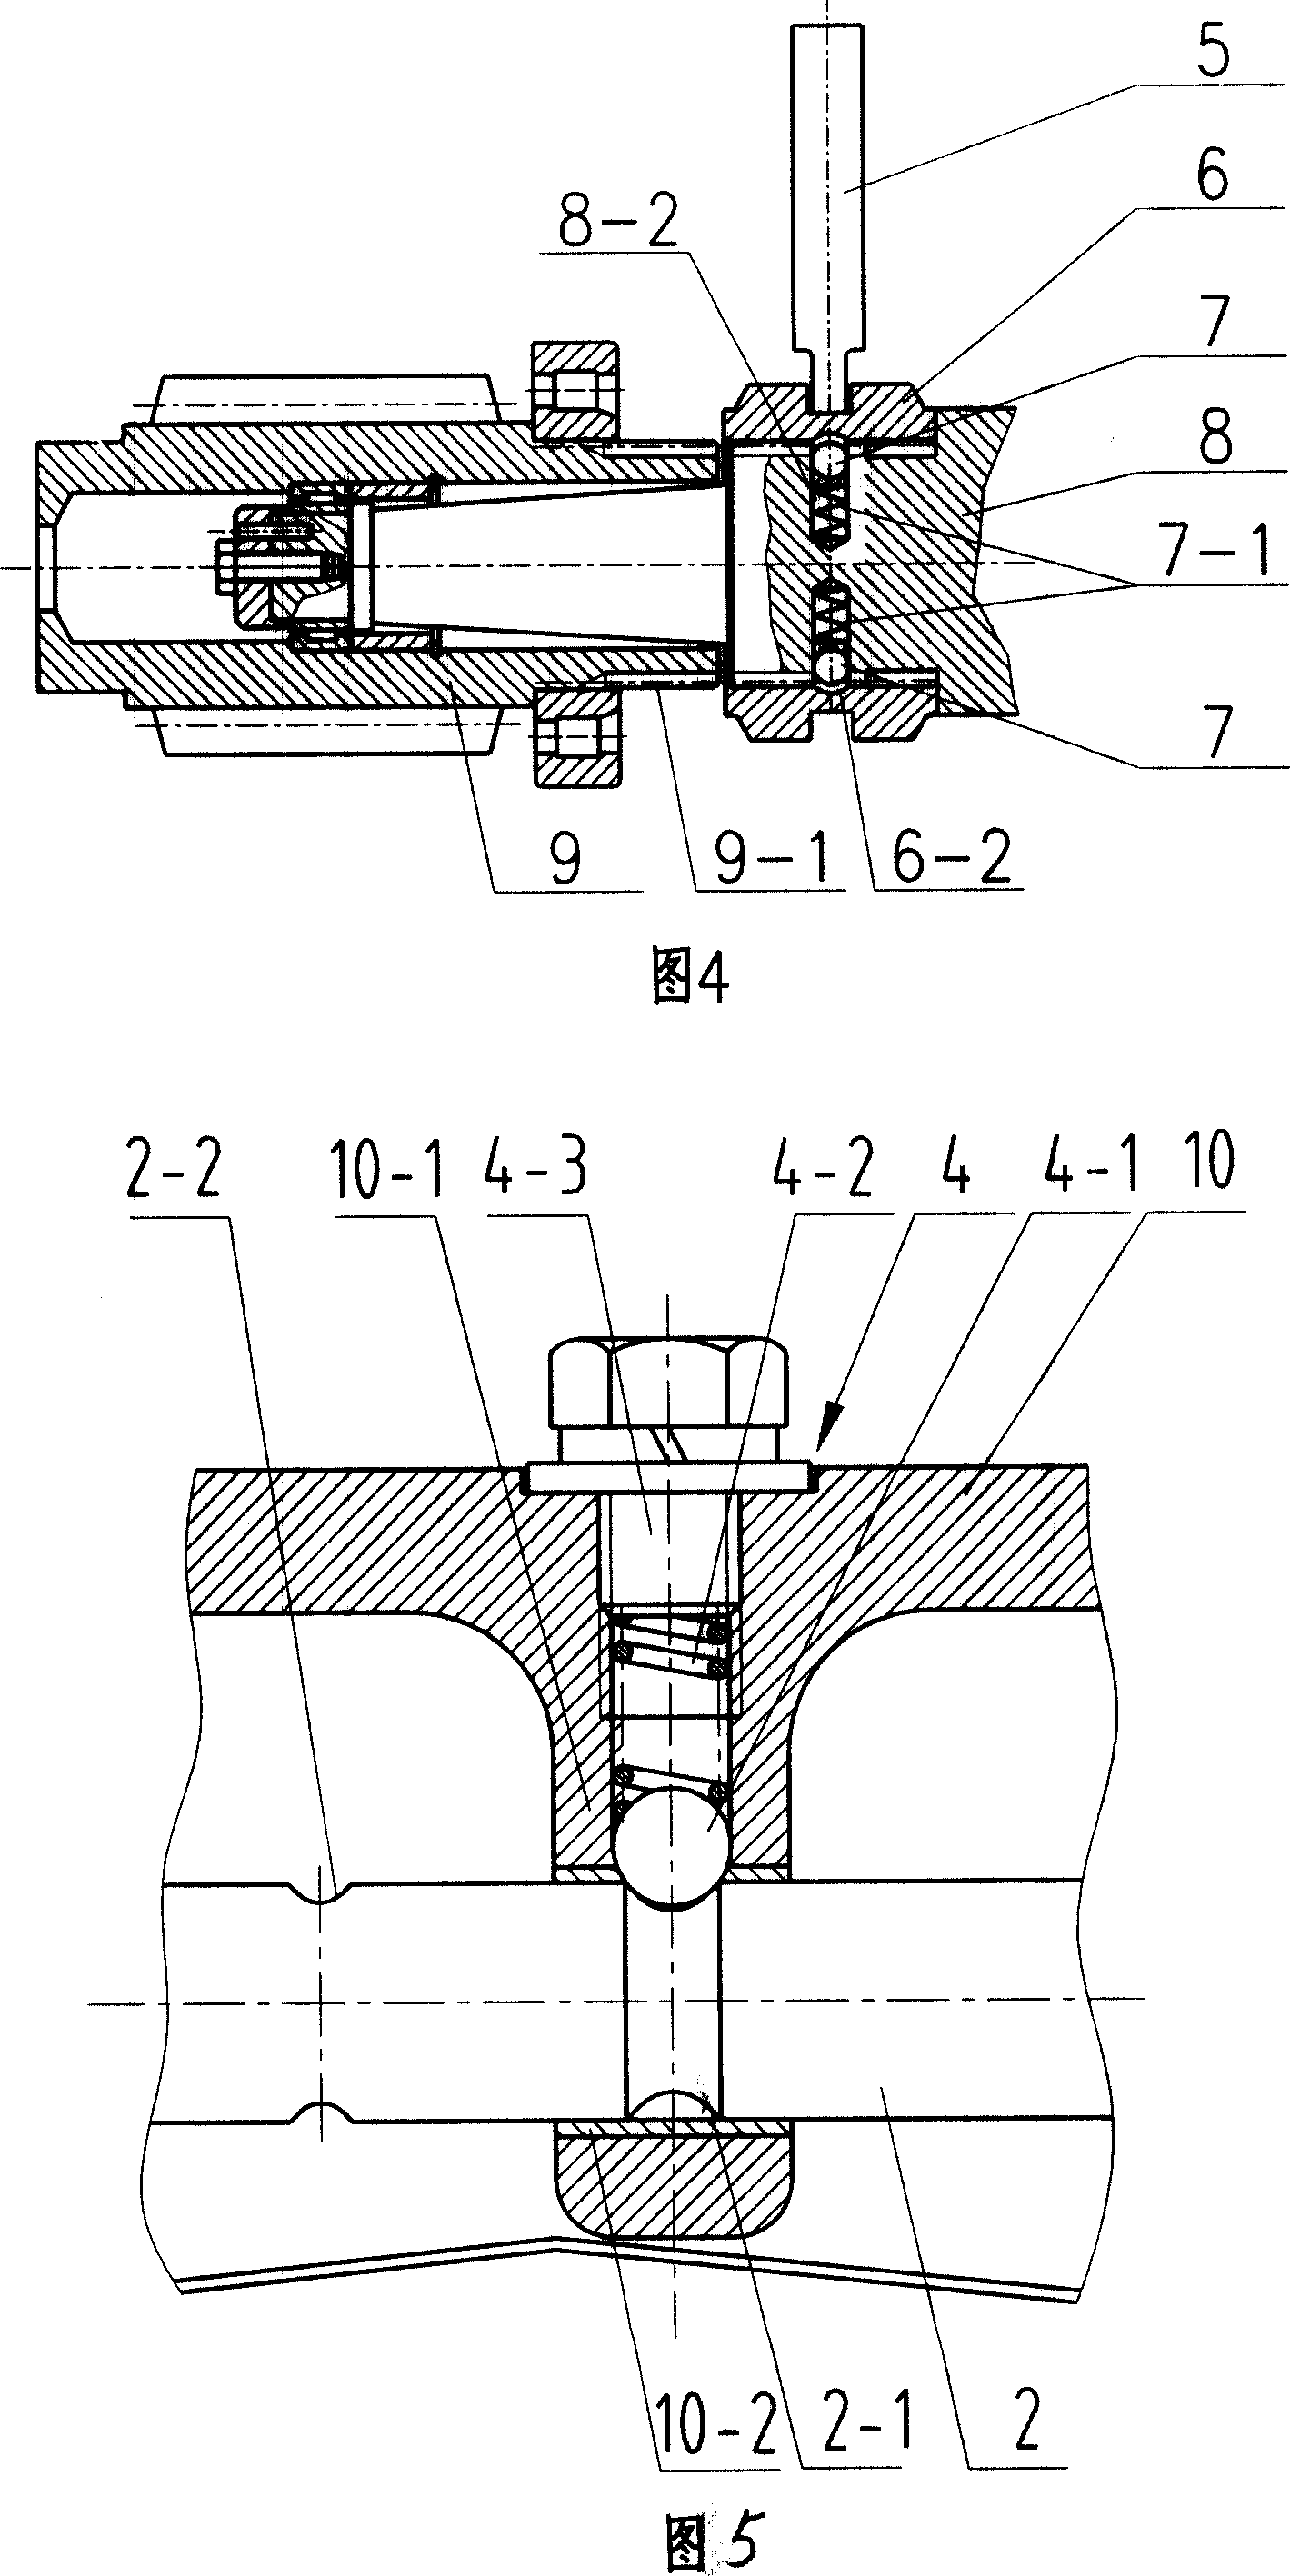 Axle gear box shifting locking mechanism